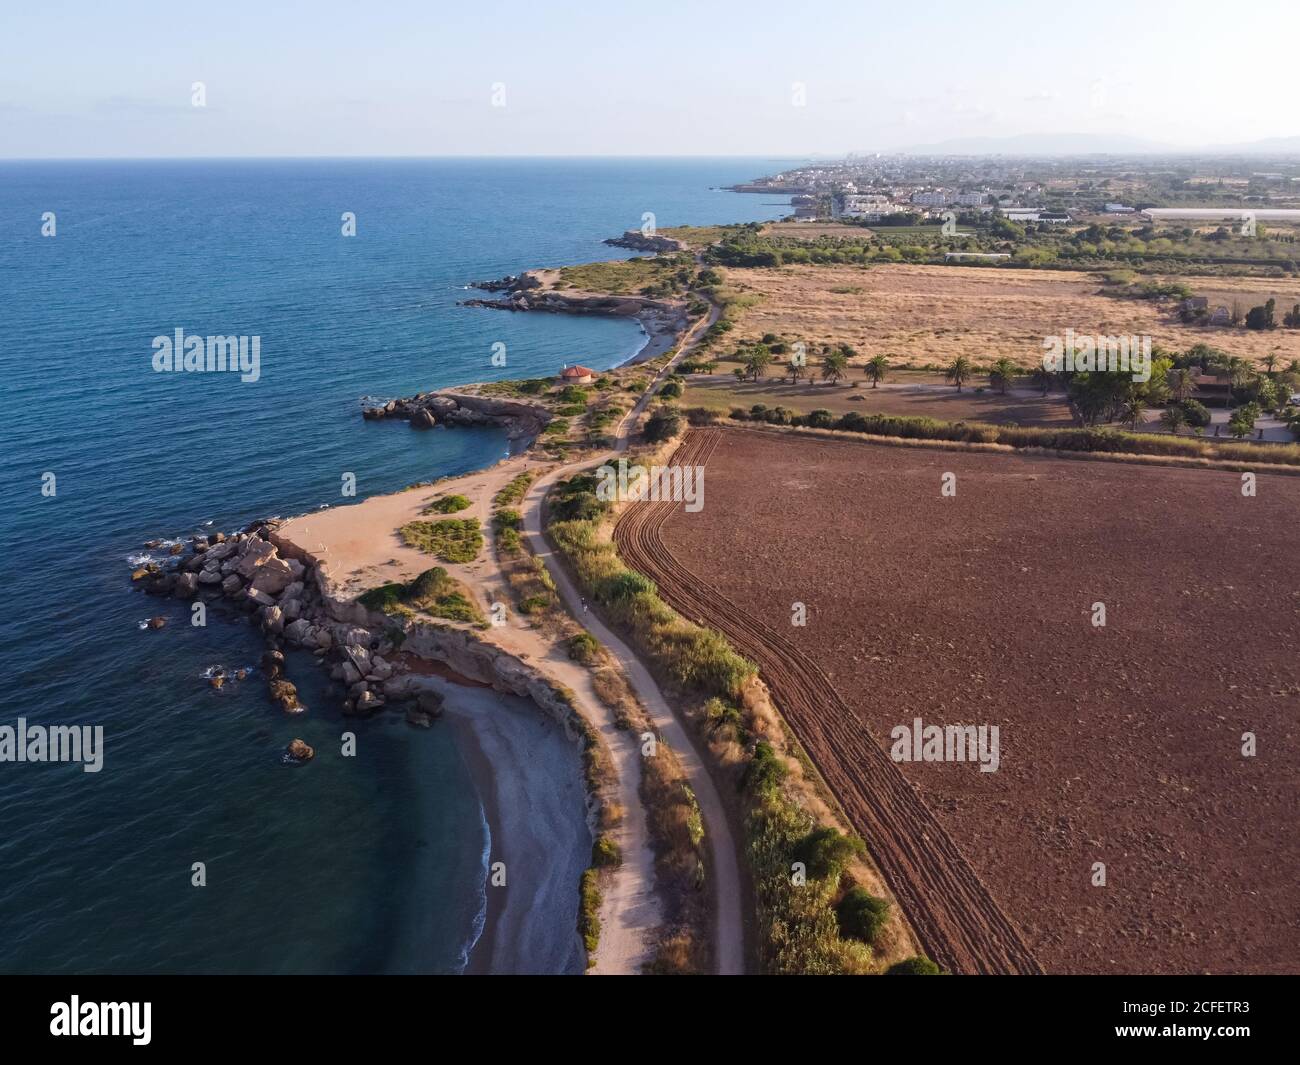 Aerial view of a rocky coastline near a plowed soil field at Jardi de Sol de Riu, Vinaros, Spain. Stock Photo